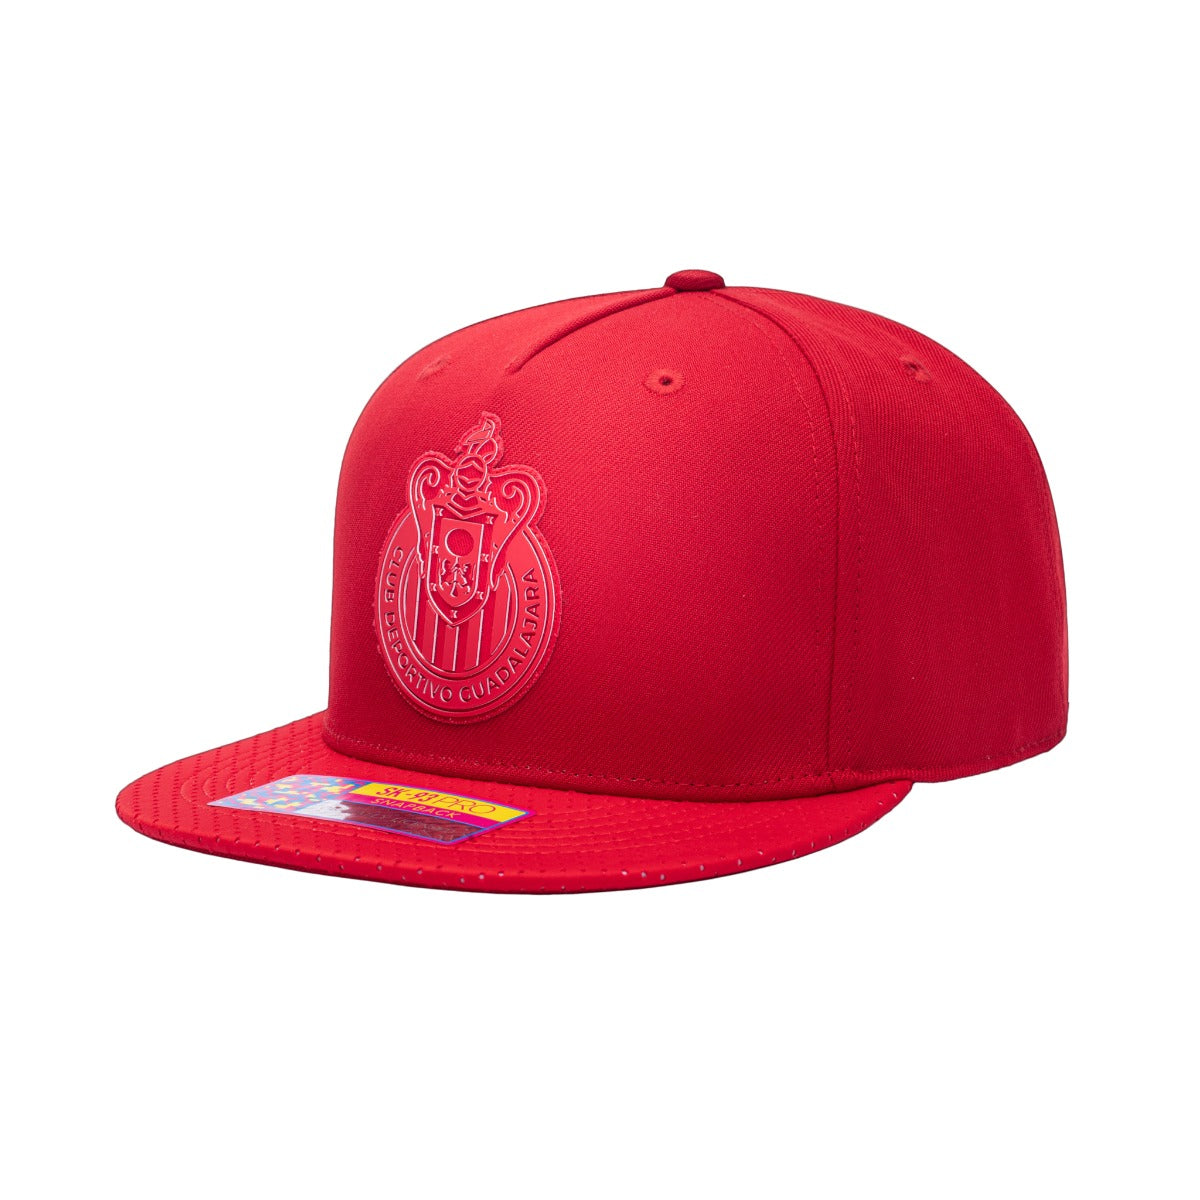 FI Collection Chivas Elite Snapback Hat - Red (Diagonal 1)